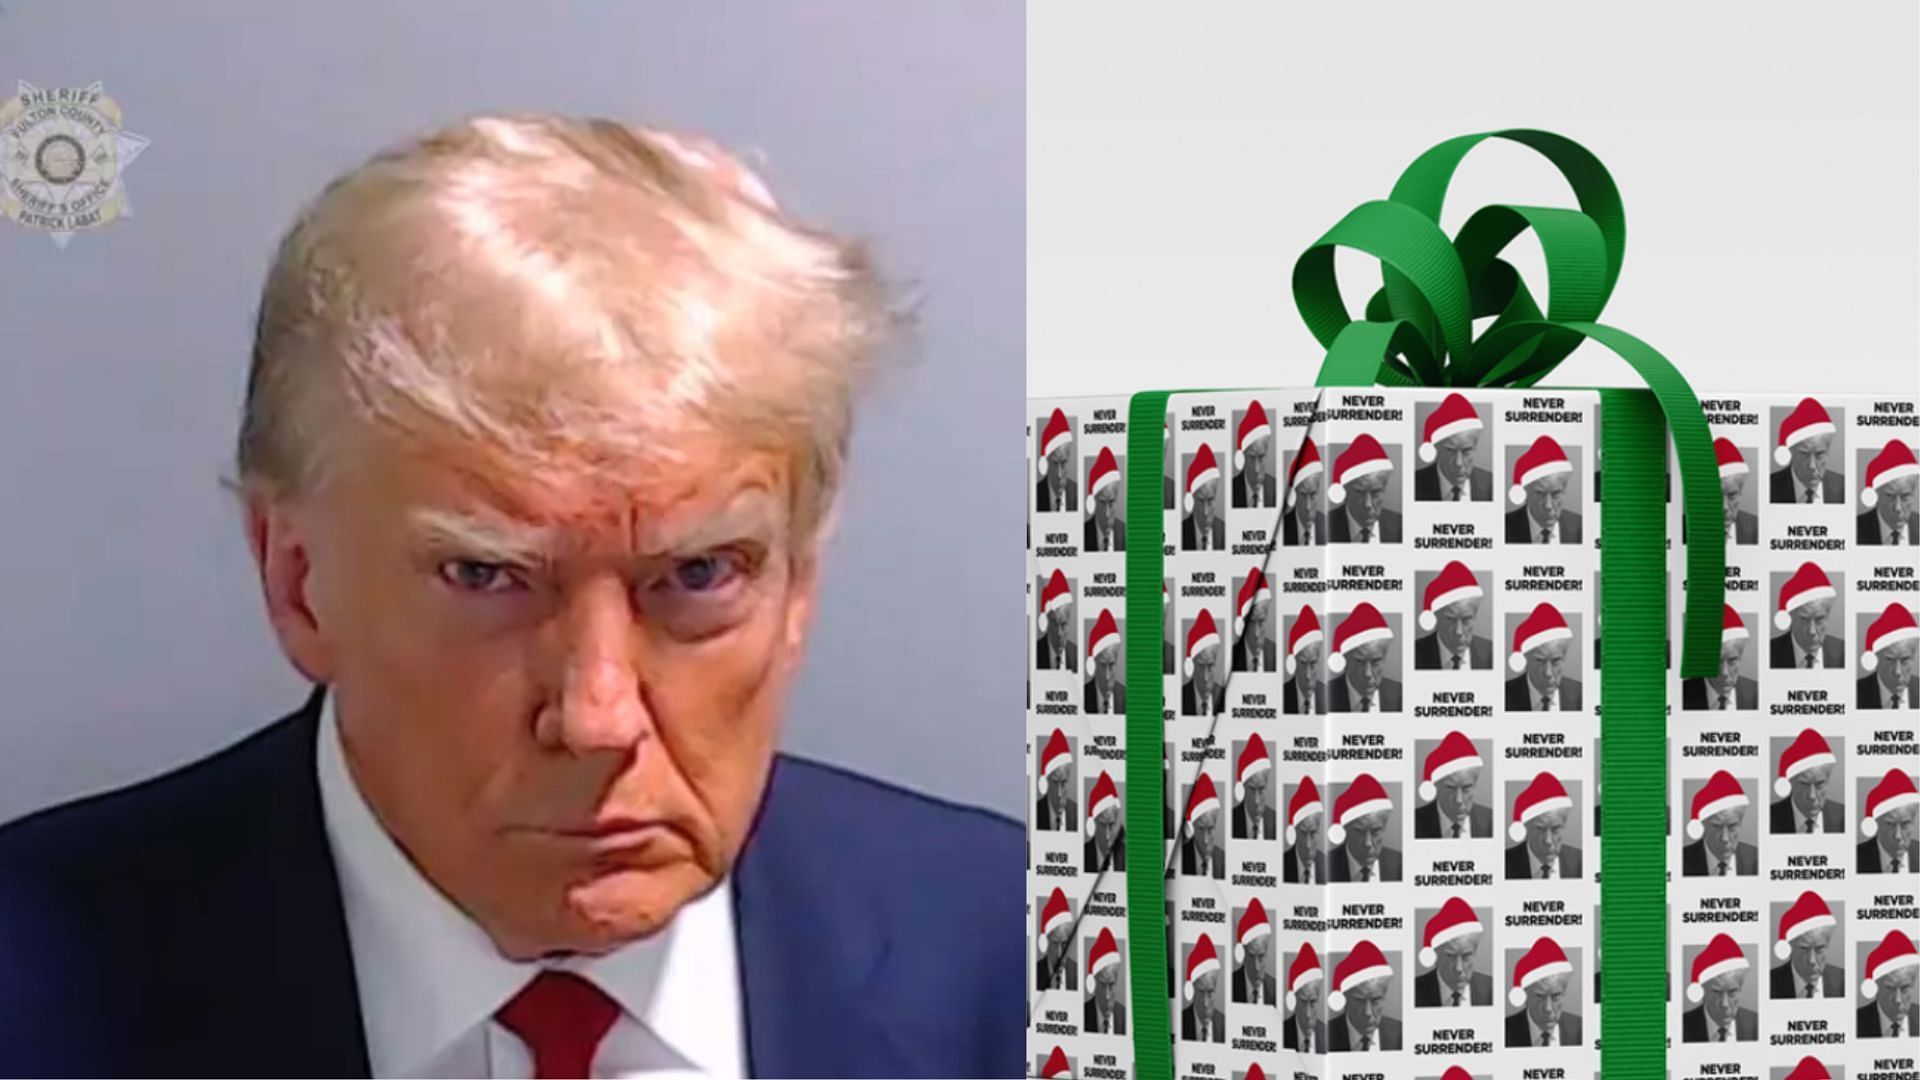 Trump Mug Shot Is on Campaign's Christmas Merch, Too